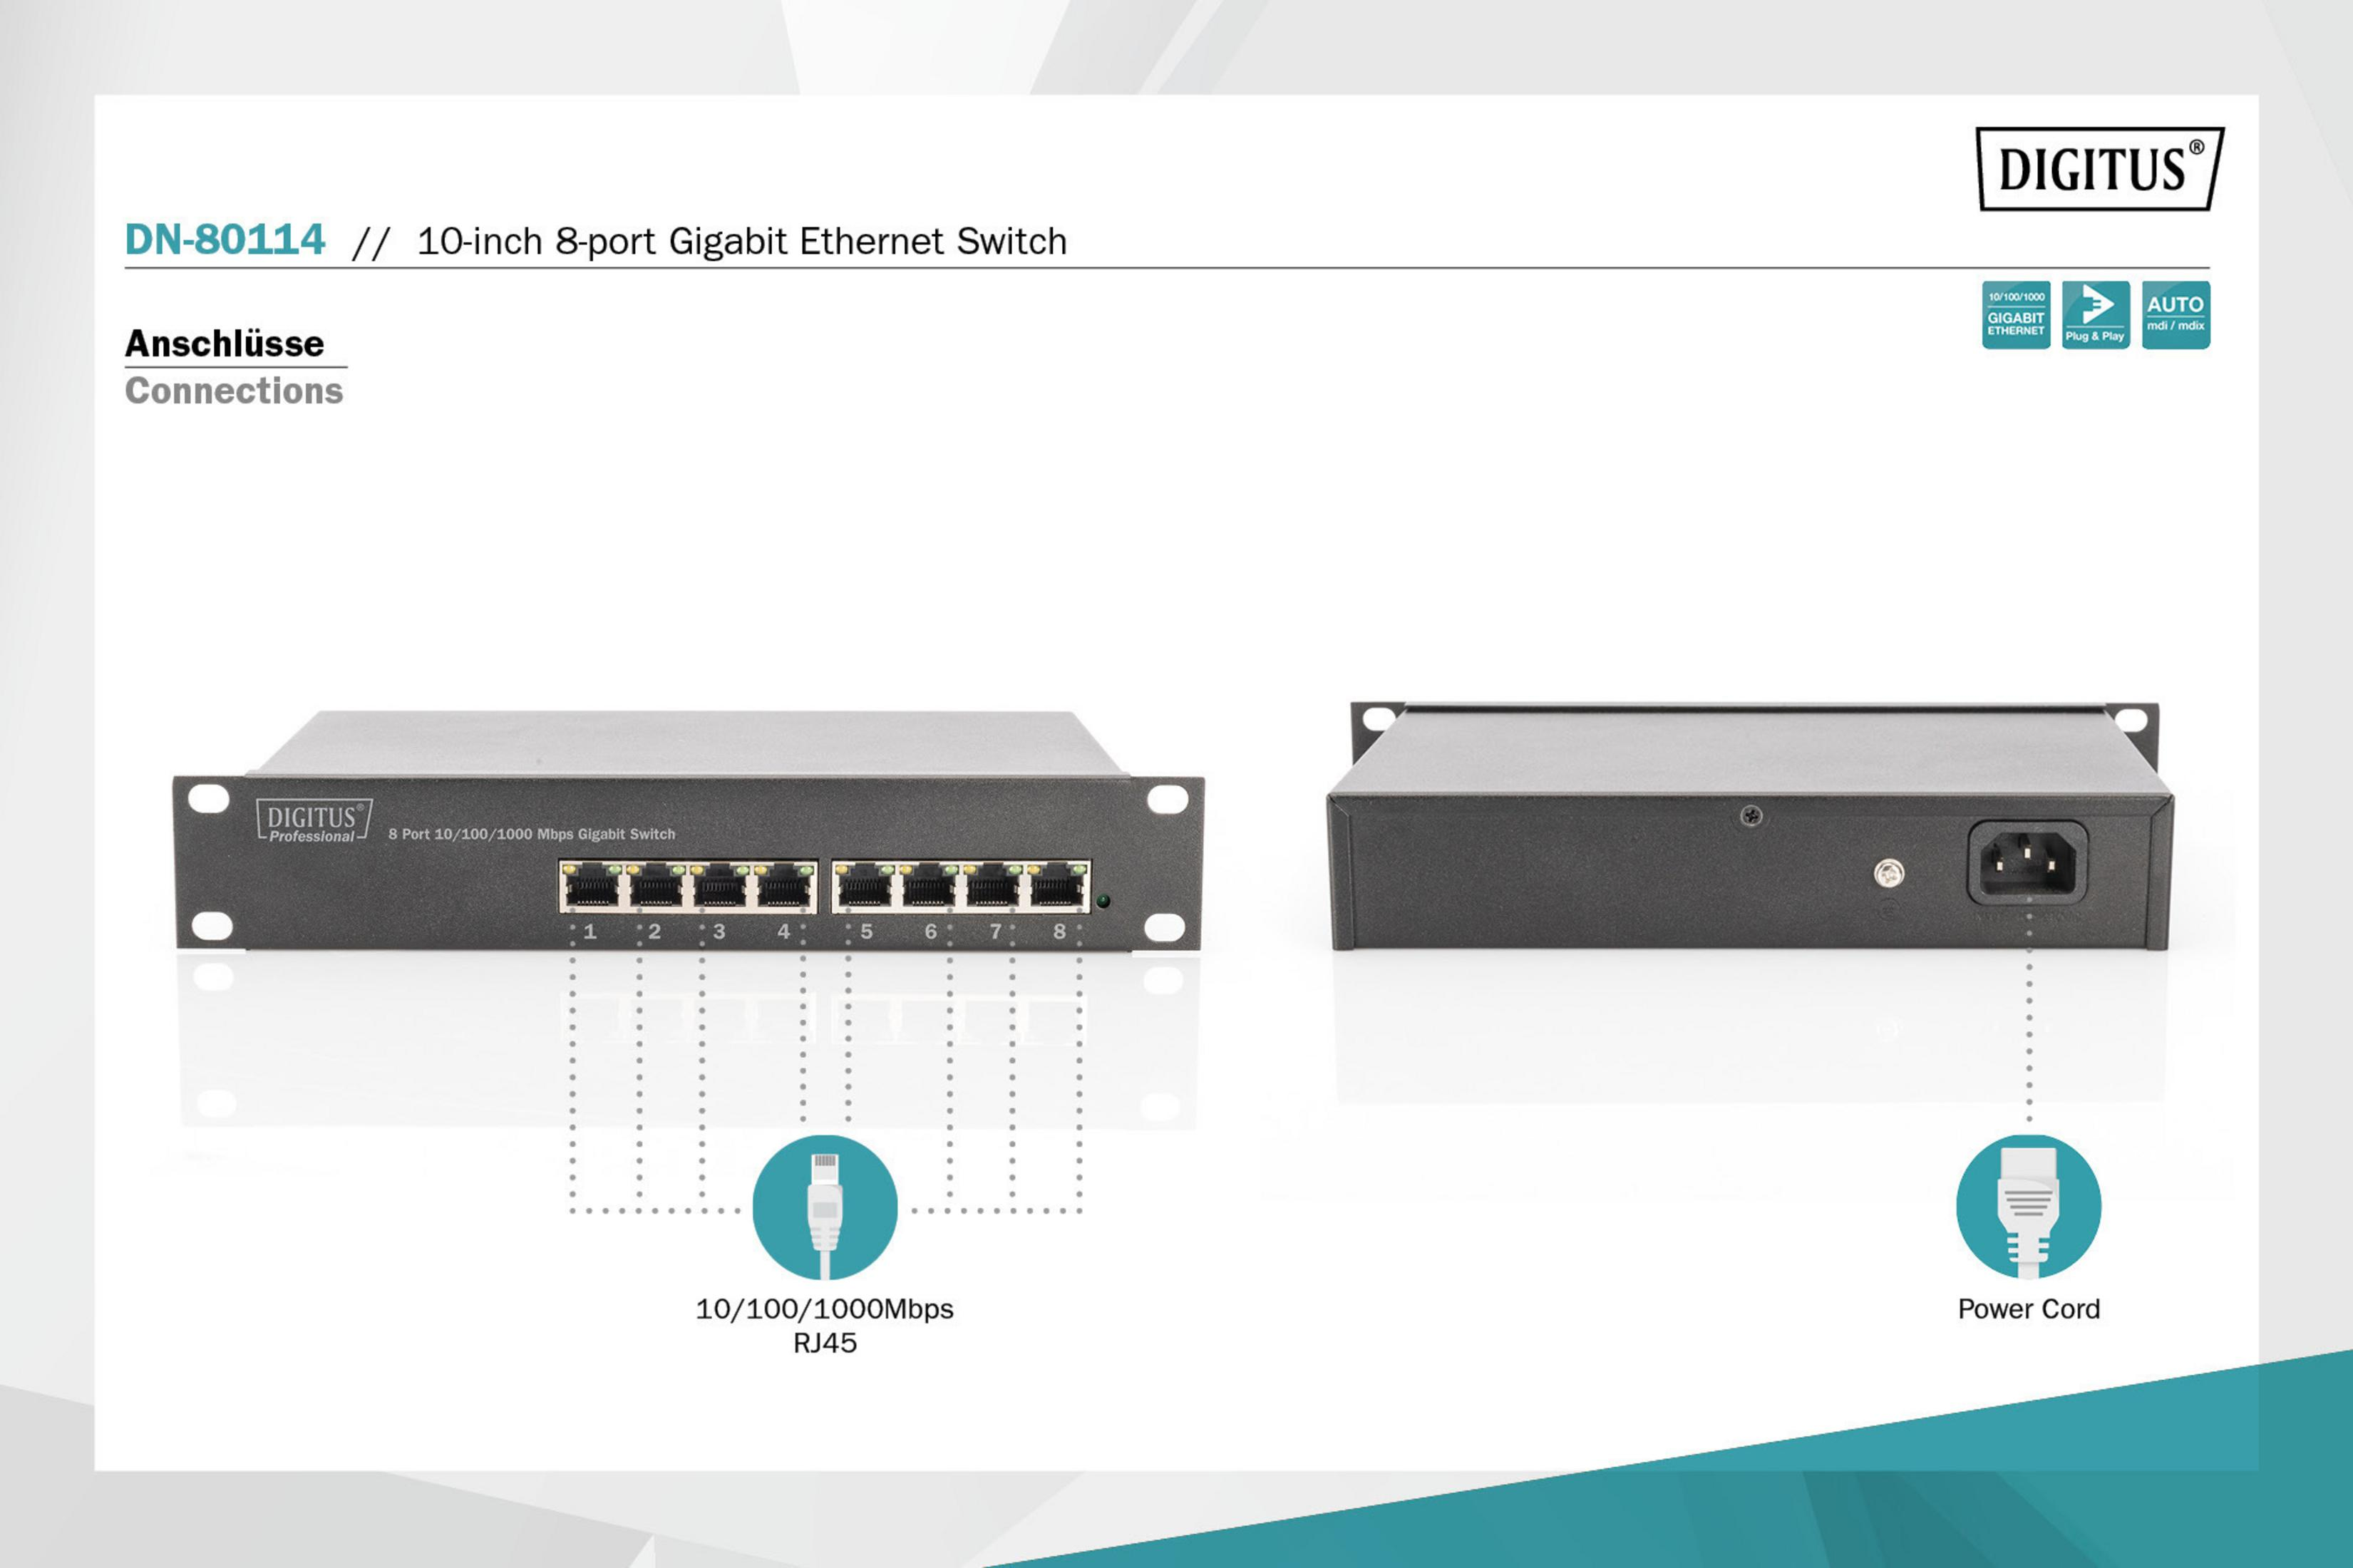 8PORT Switch DIGITUS SWITCH, GIGABIT Ethernet 10ZOLL DN-80114